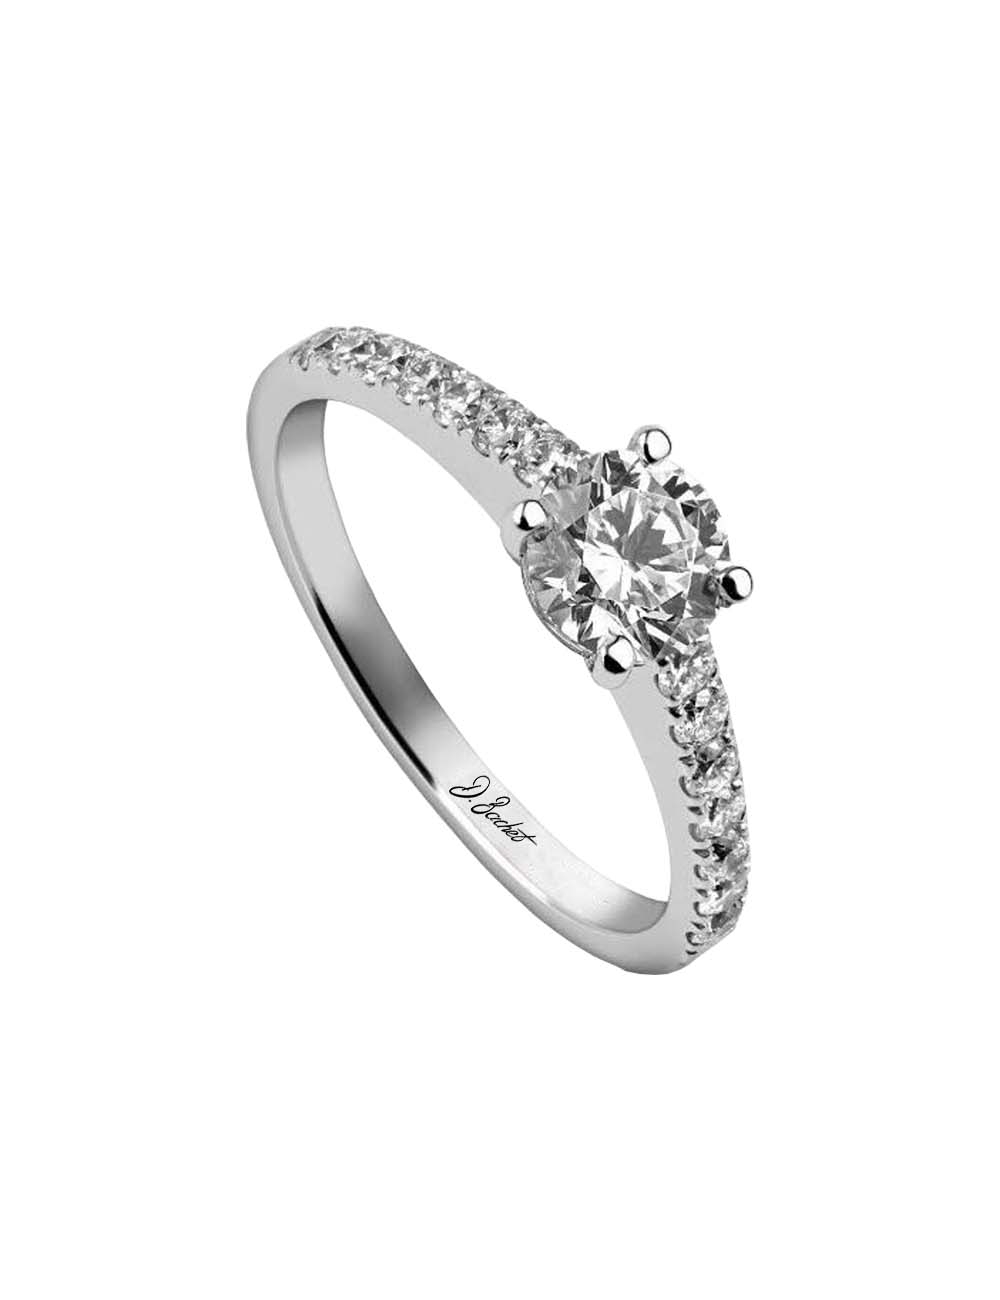 Platinum engagement ring: 0.50 ct center diamond, 7 white diamonds, modern & timeless.